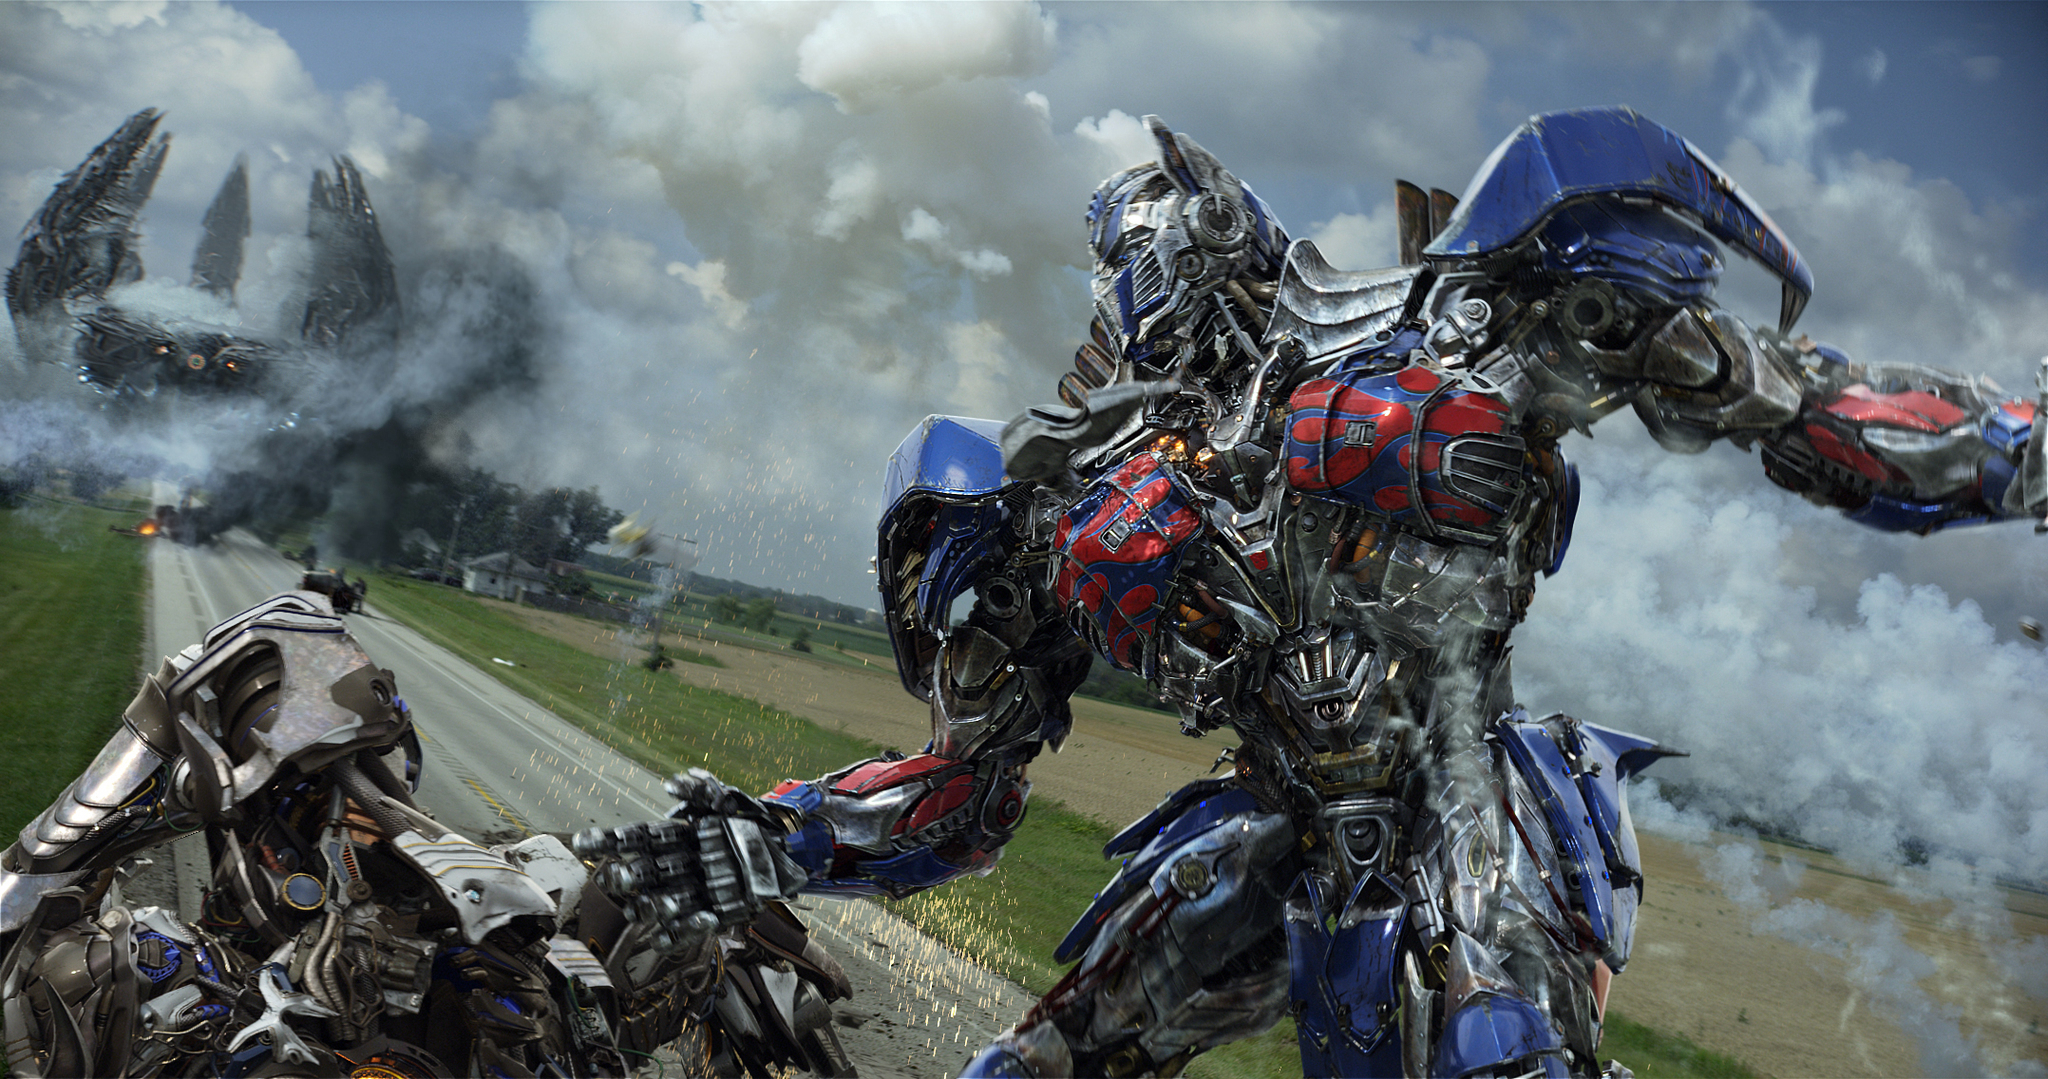 Transformers: Kỷ Nguyên Hủy Diệt - Transformers: Age of Extinction (2014)